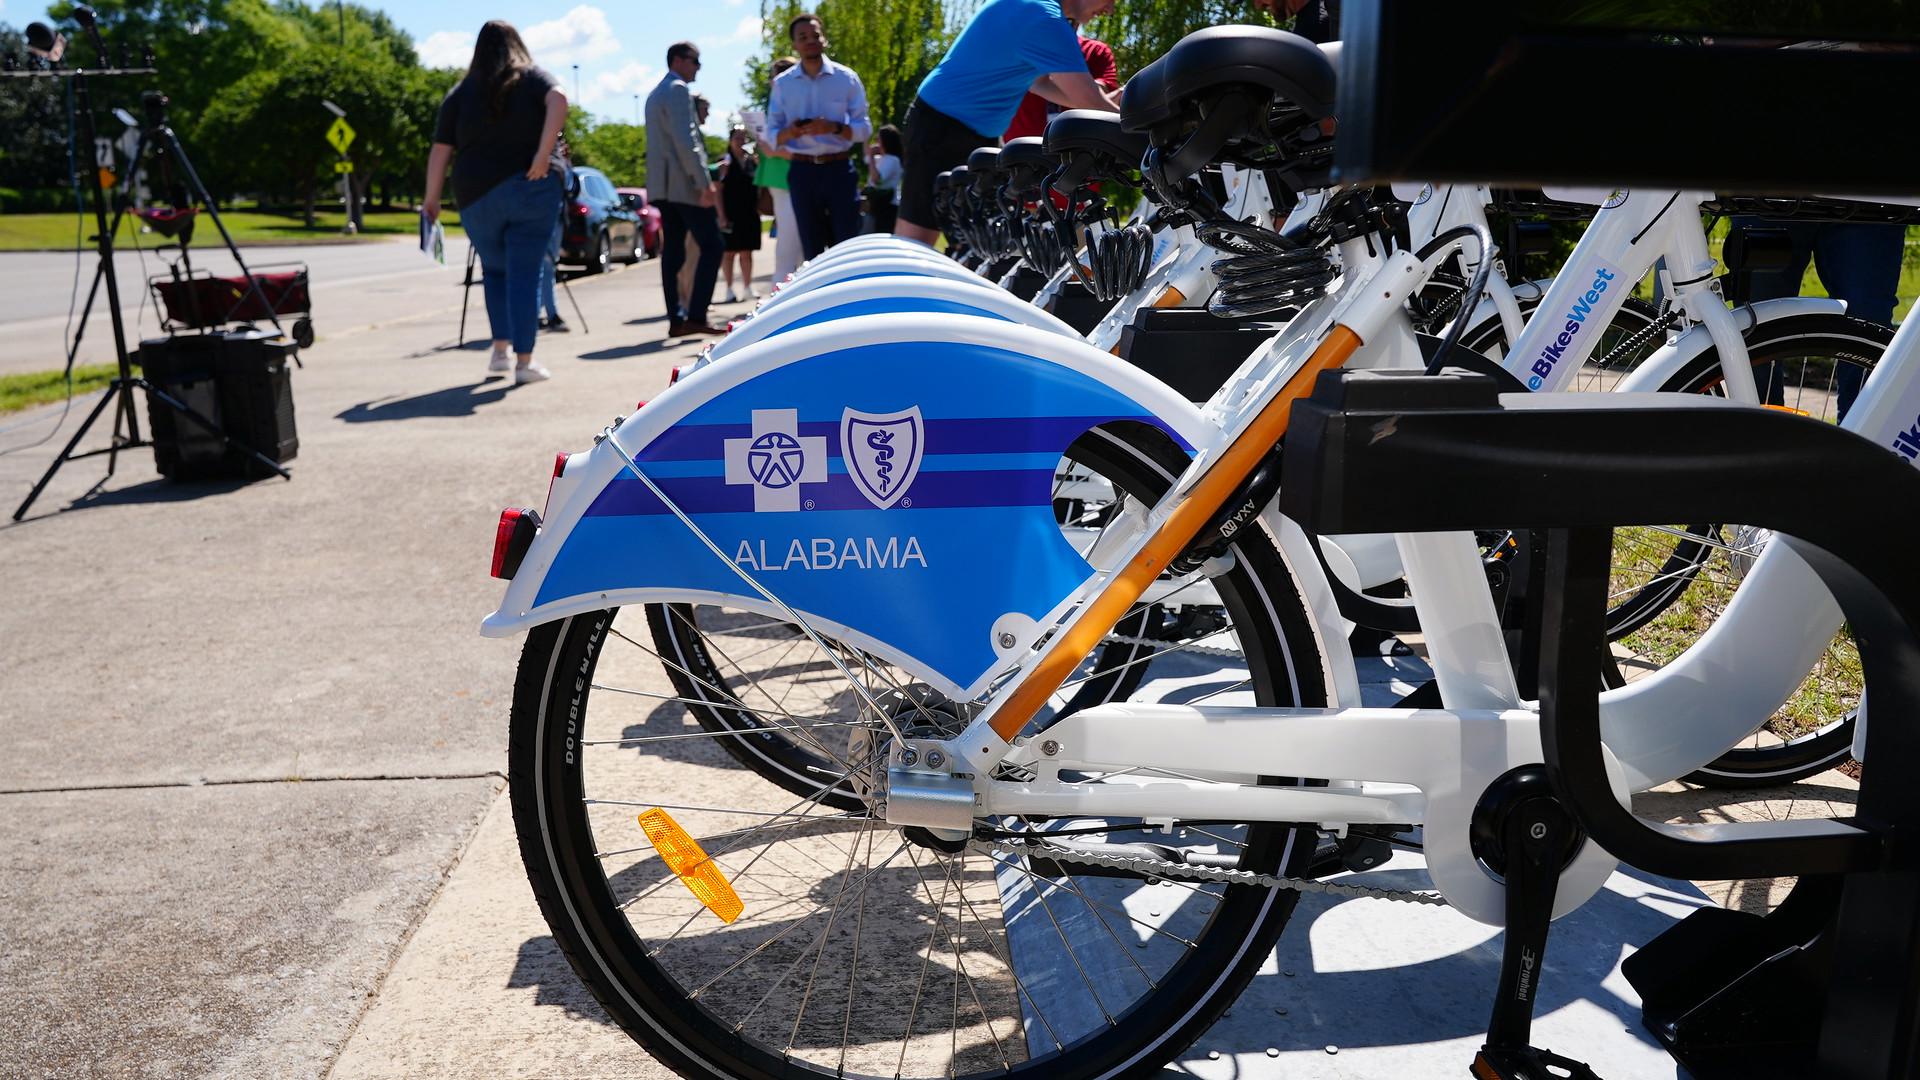 Take a ride around Research Park with Huntsville's latest Blue Bike Bike Share program location.